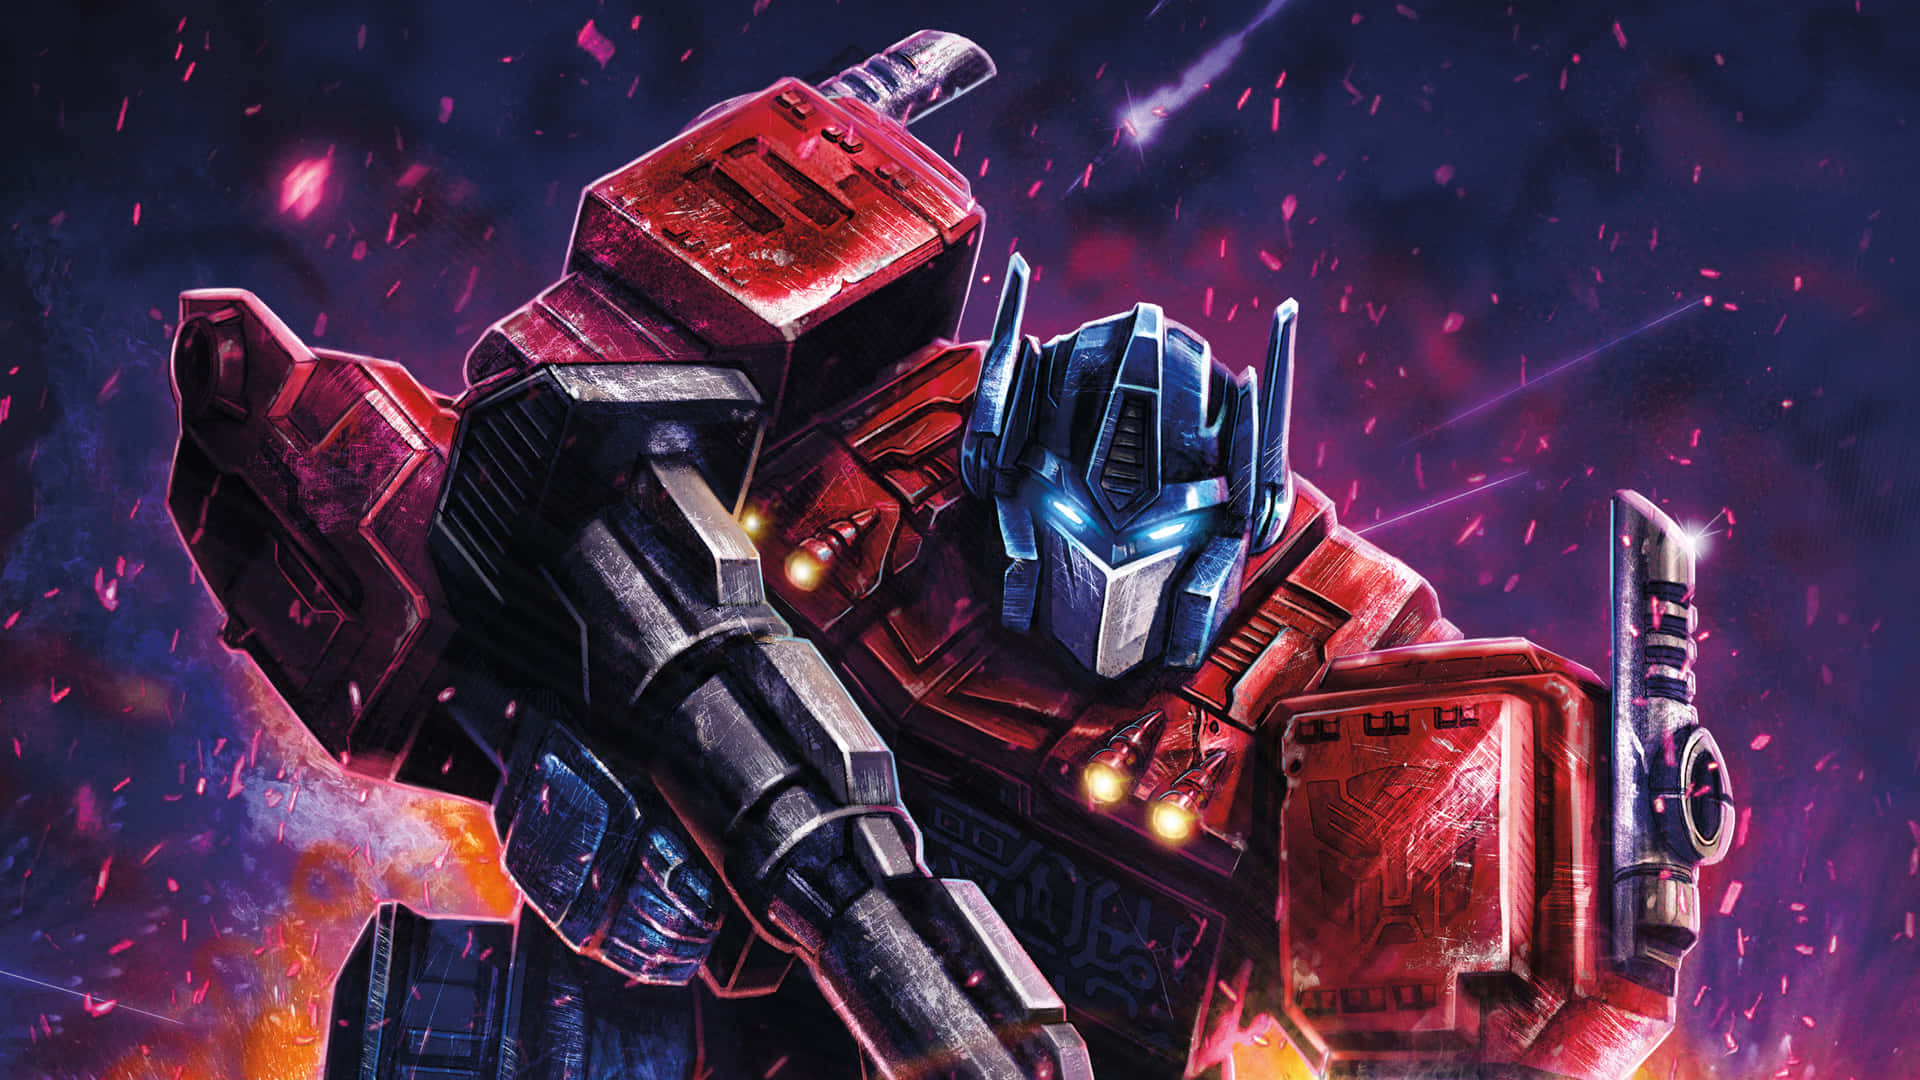 Optimus Prime embracing 4K technology Wallpaper